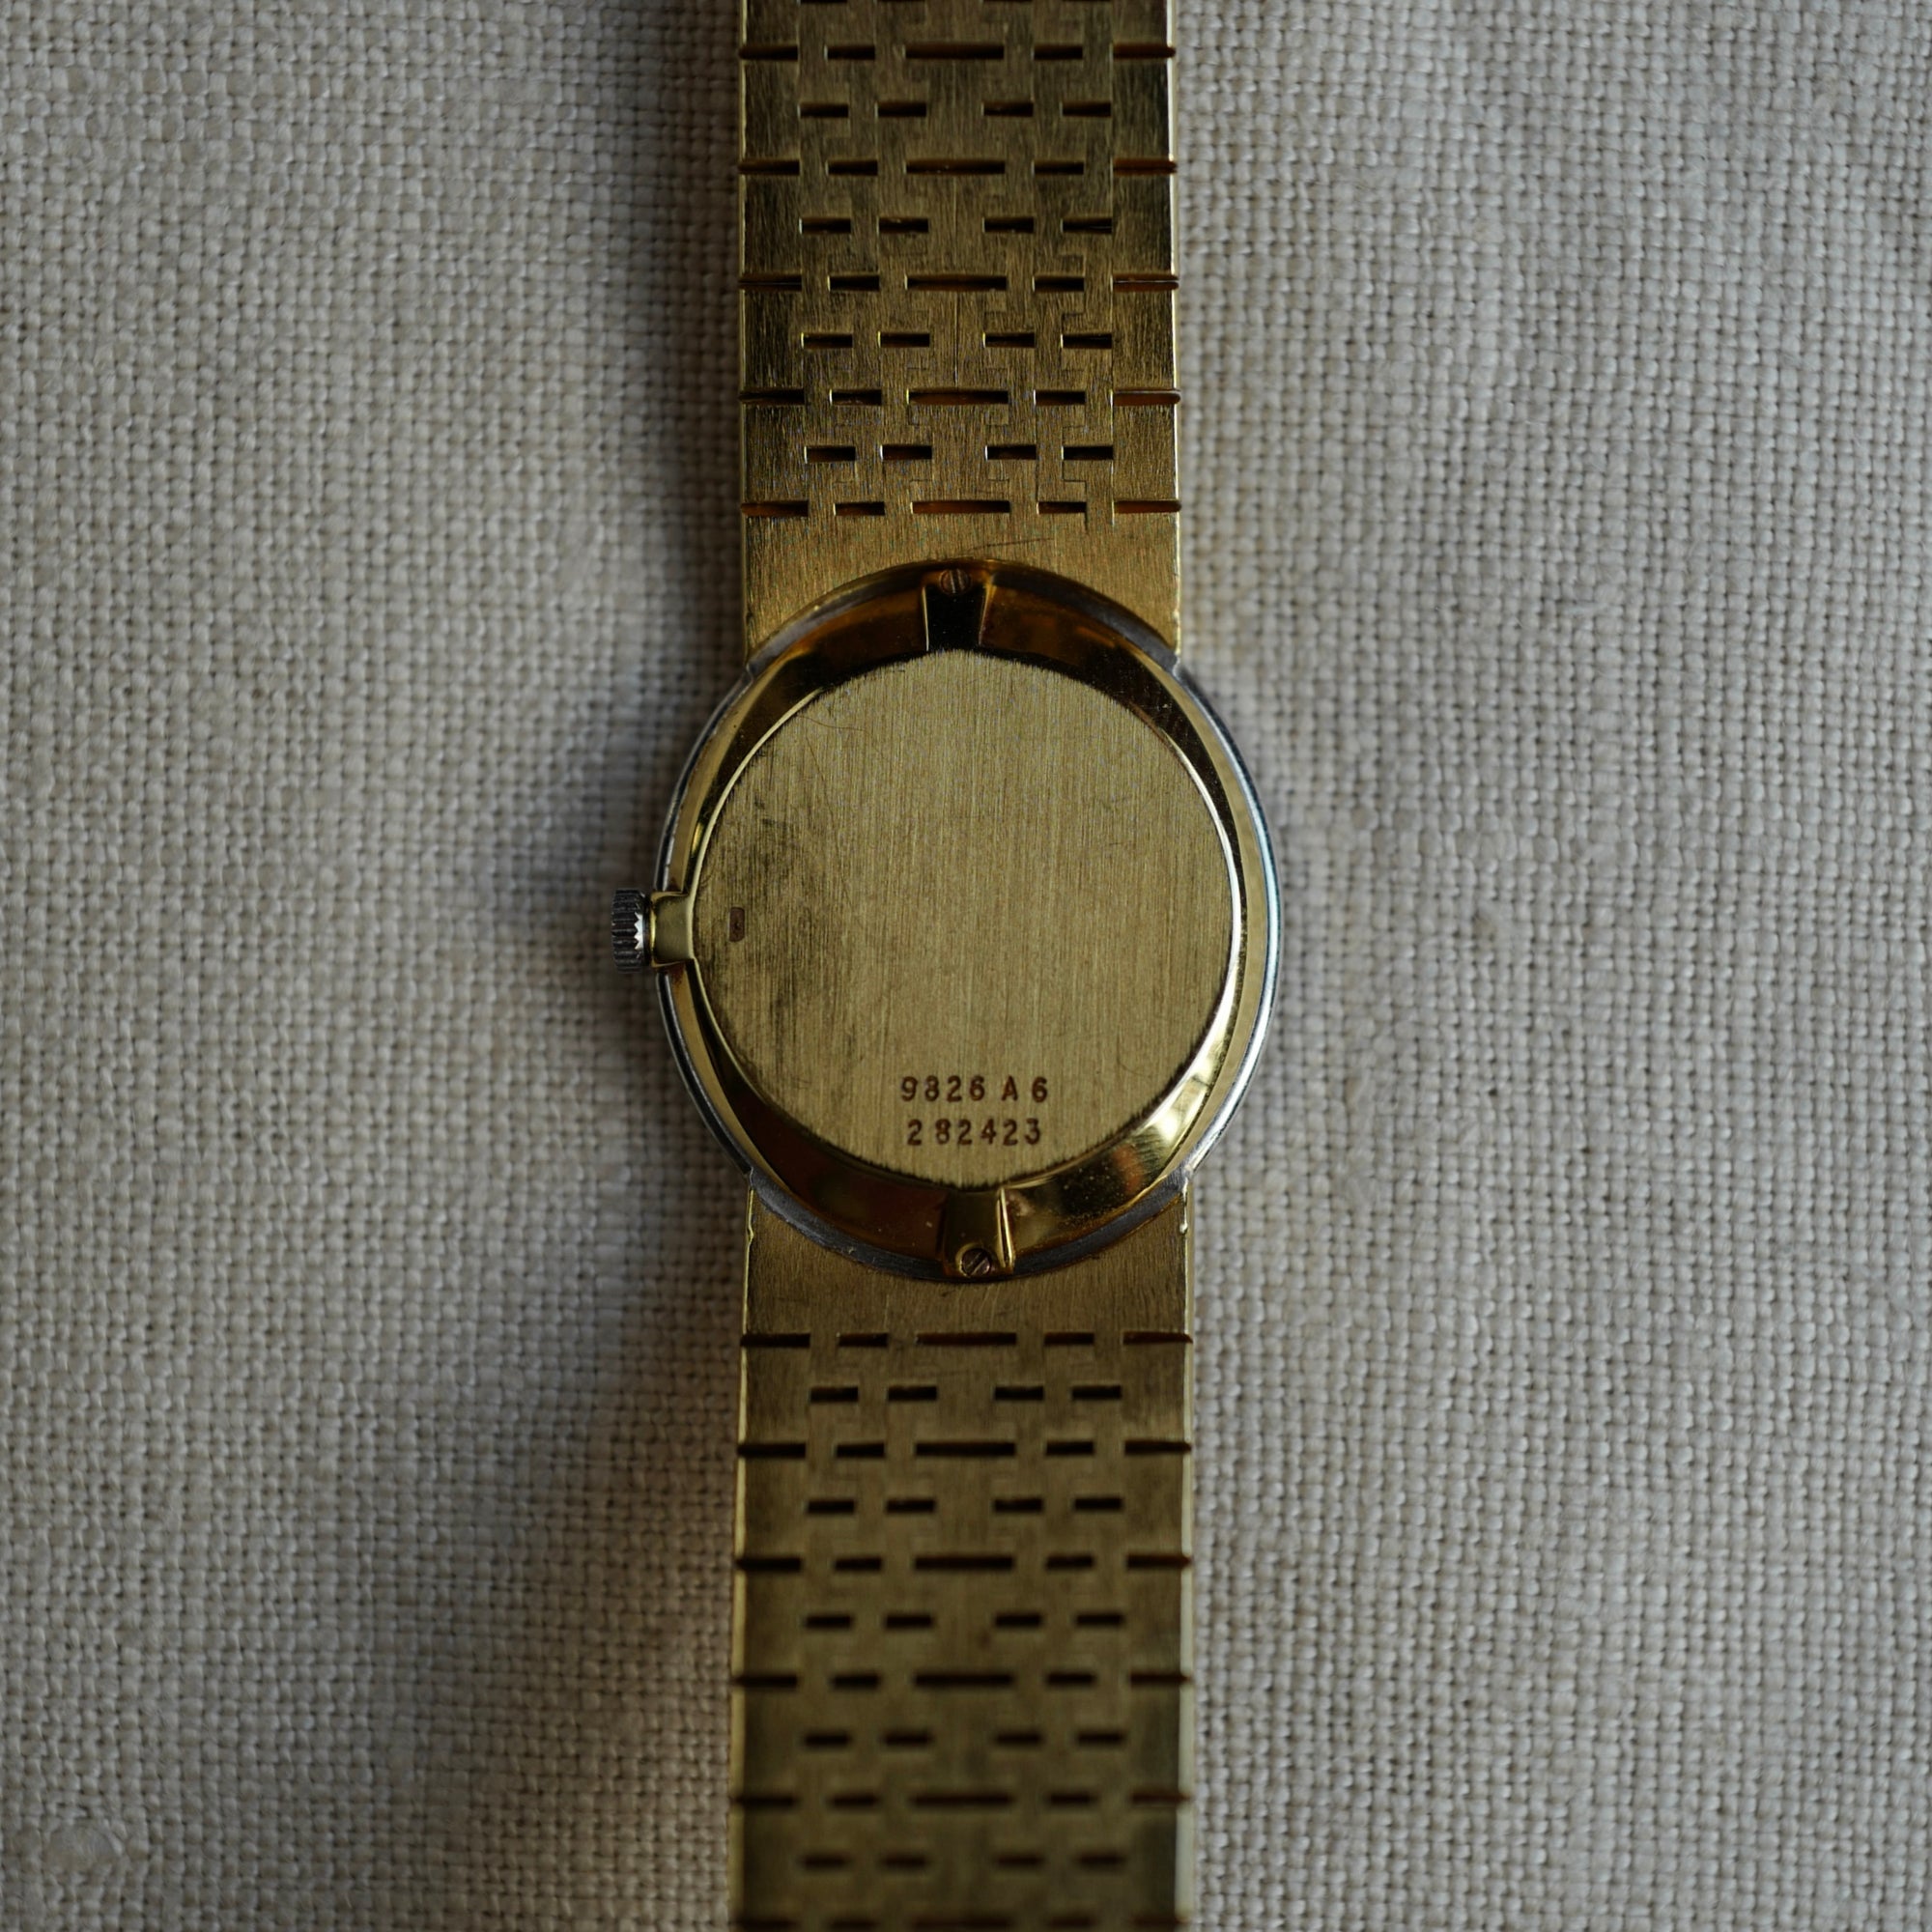 Piaget - Piaget Yellow Gold Tigerseye Diamond Watch Ref. 9826 - The Keystone Watches